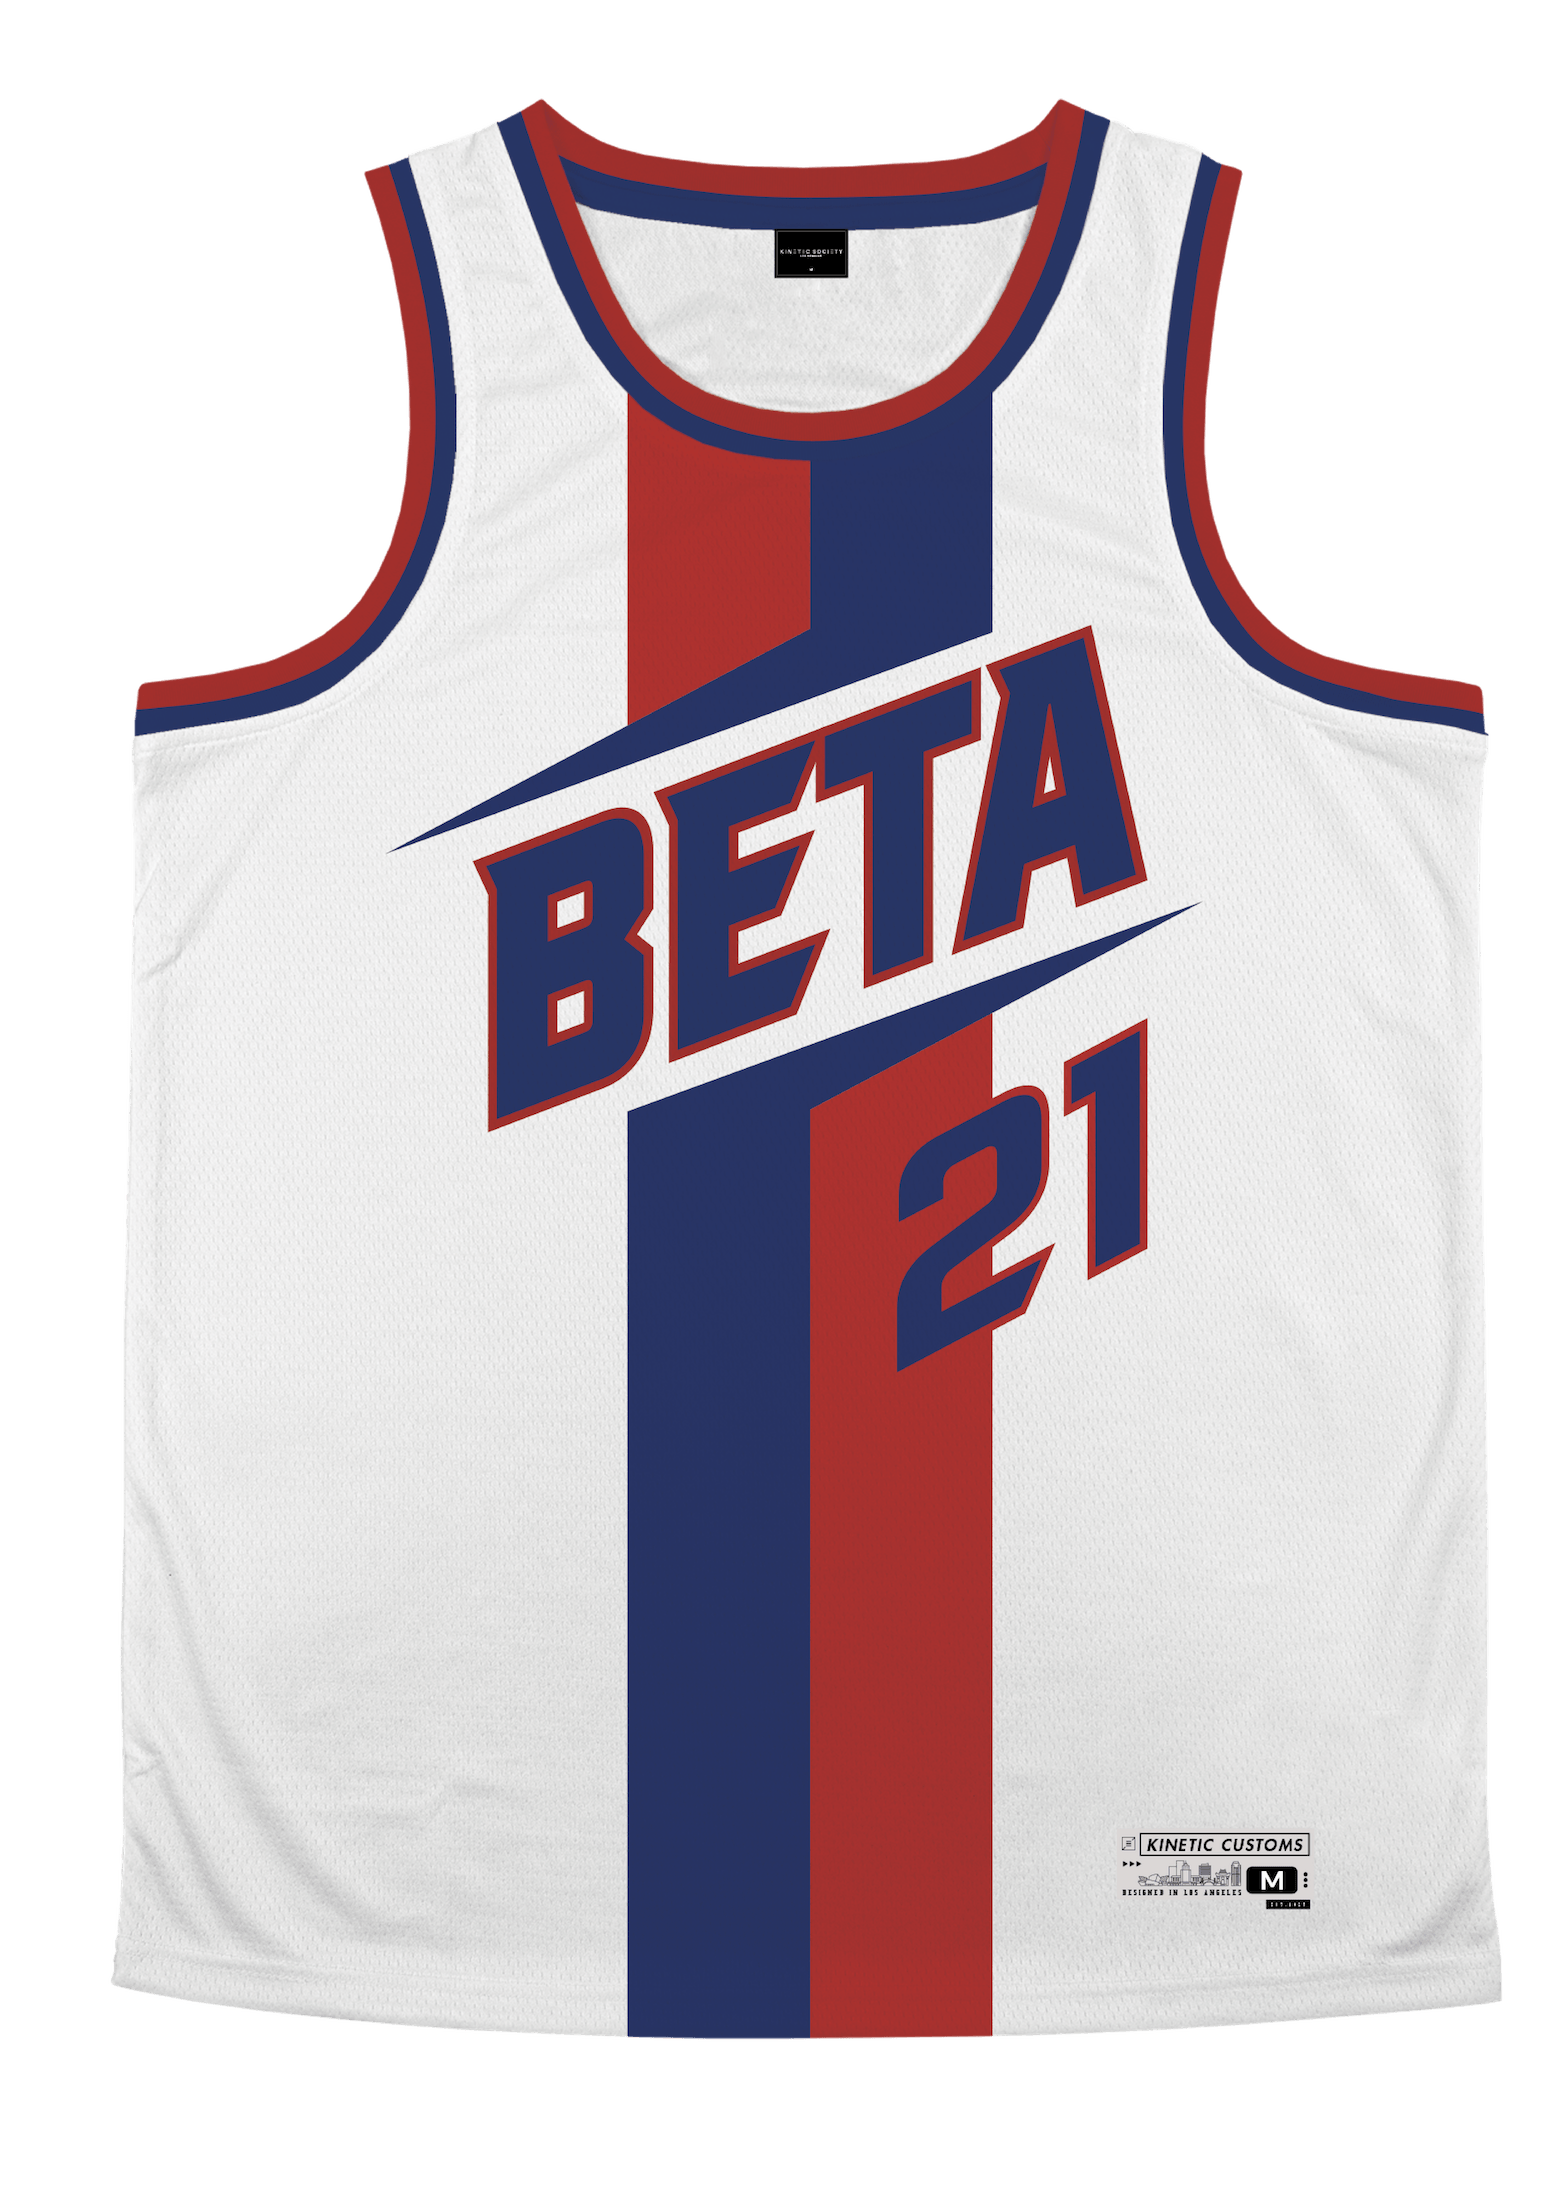 BETA THETA PI - Middle Child Basketball Jersey Premium Basketball Kinetic Society LLC 